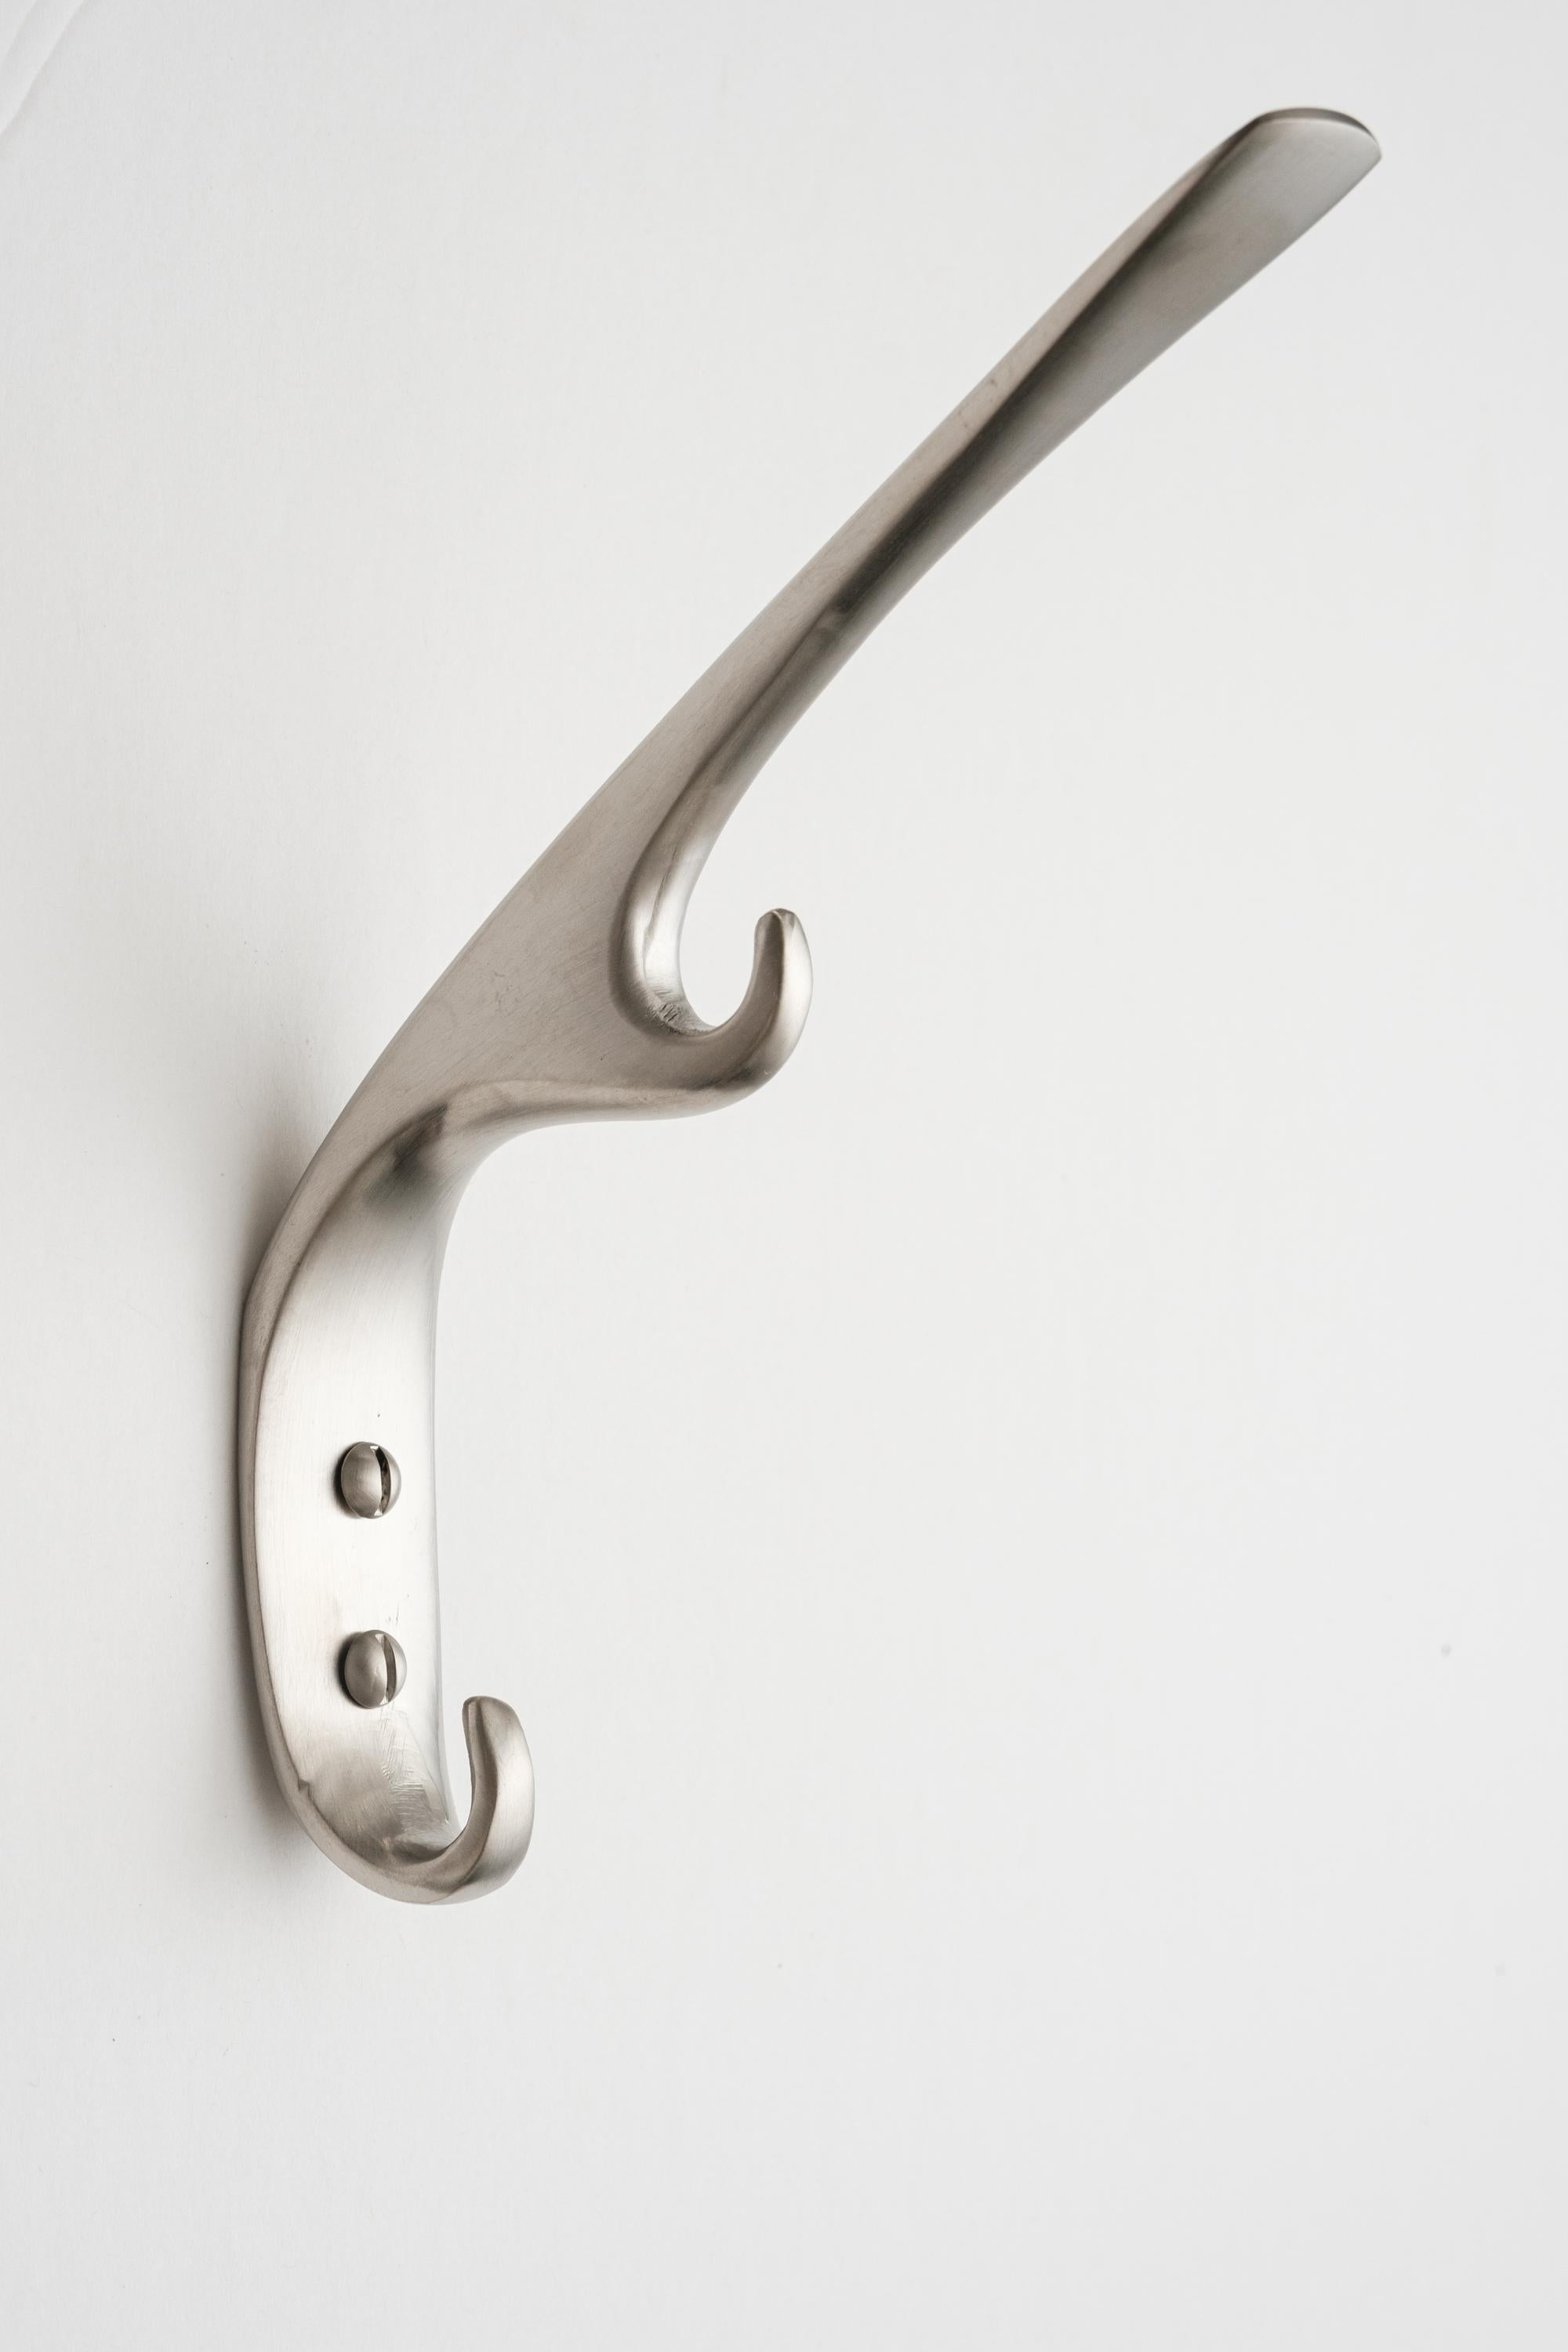 Carl Auböck #5439 hook in nickel. Designed in the 1950s, this versatile and Minimalist Viennese hook is executed in softly brushed nickel by Werkstätte Carl Auböck, Austria.

Produced by Carl Auböck IV in the original Auböck workshop in the 7th